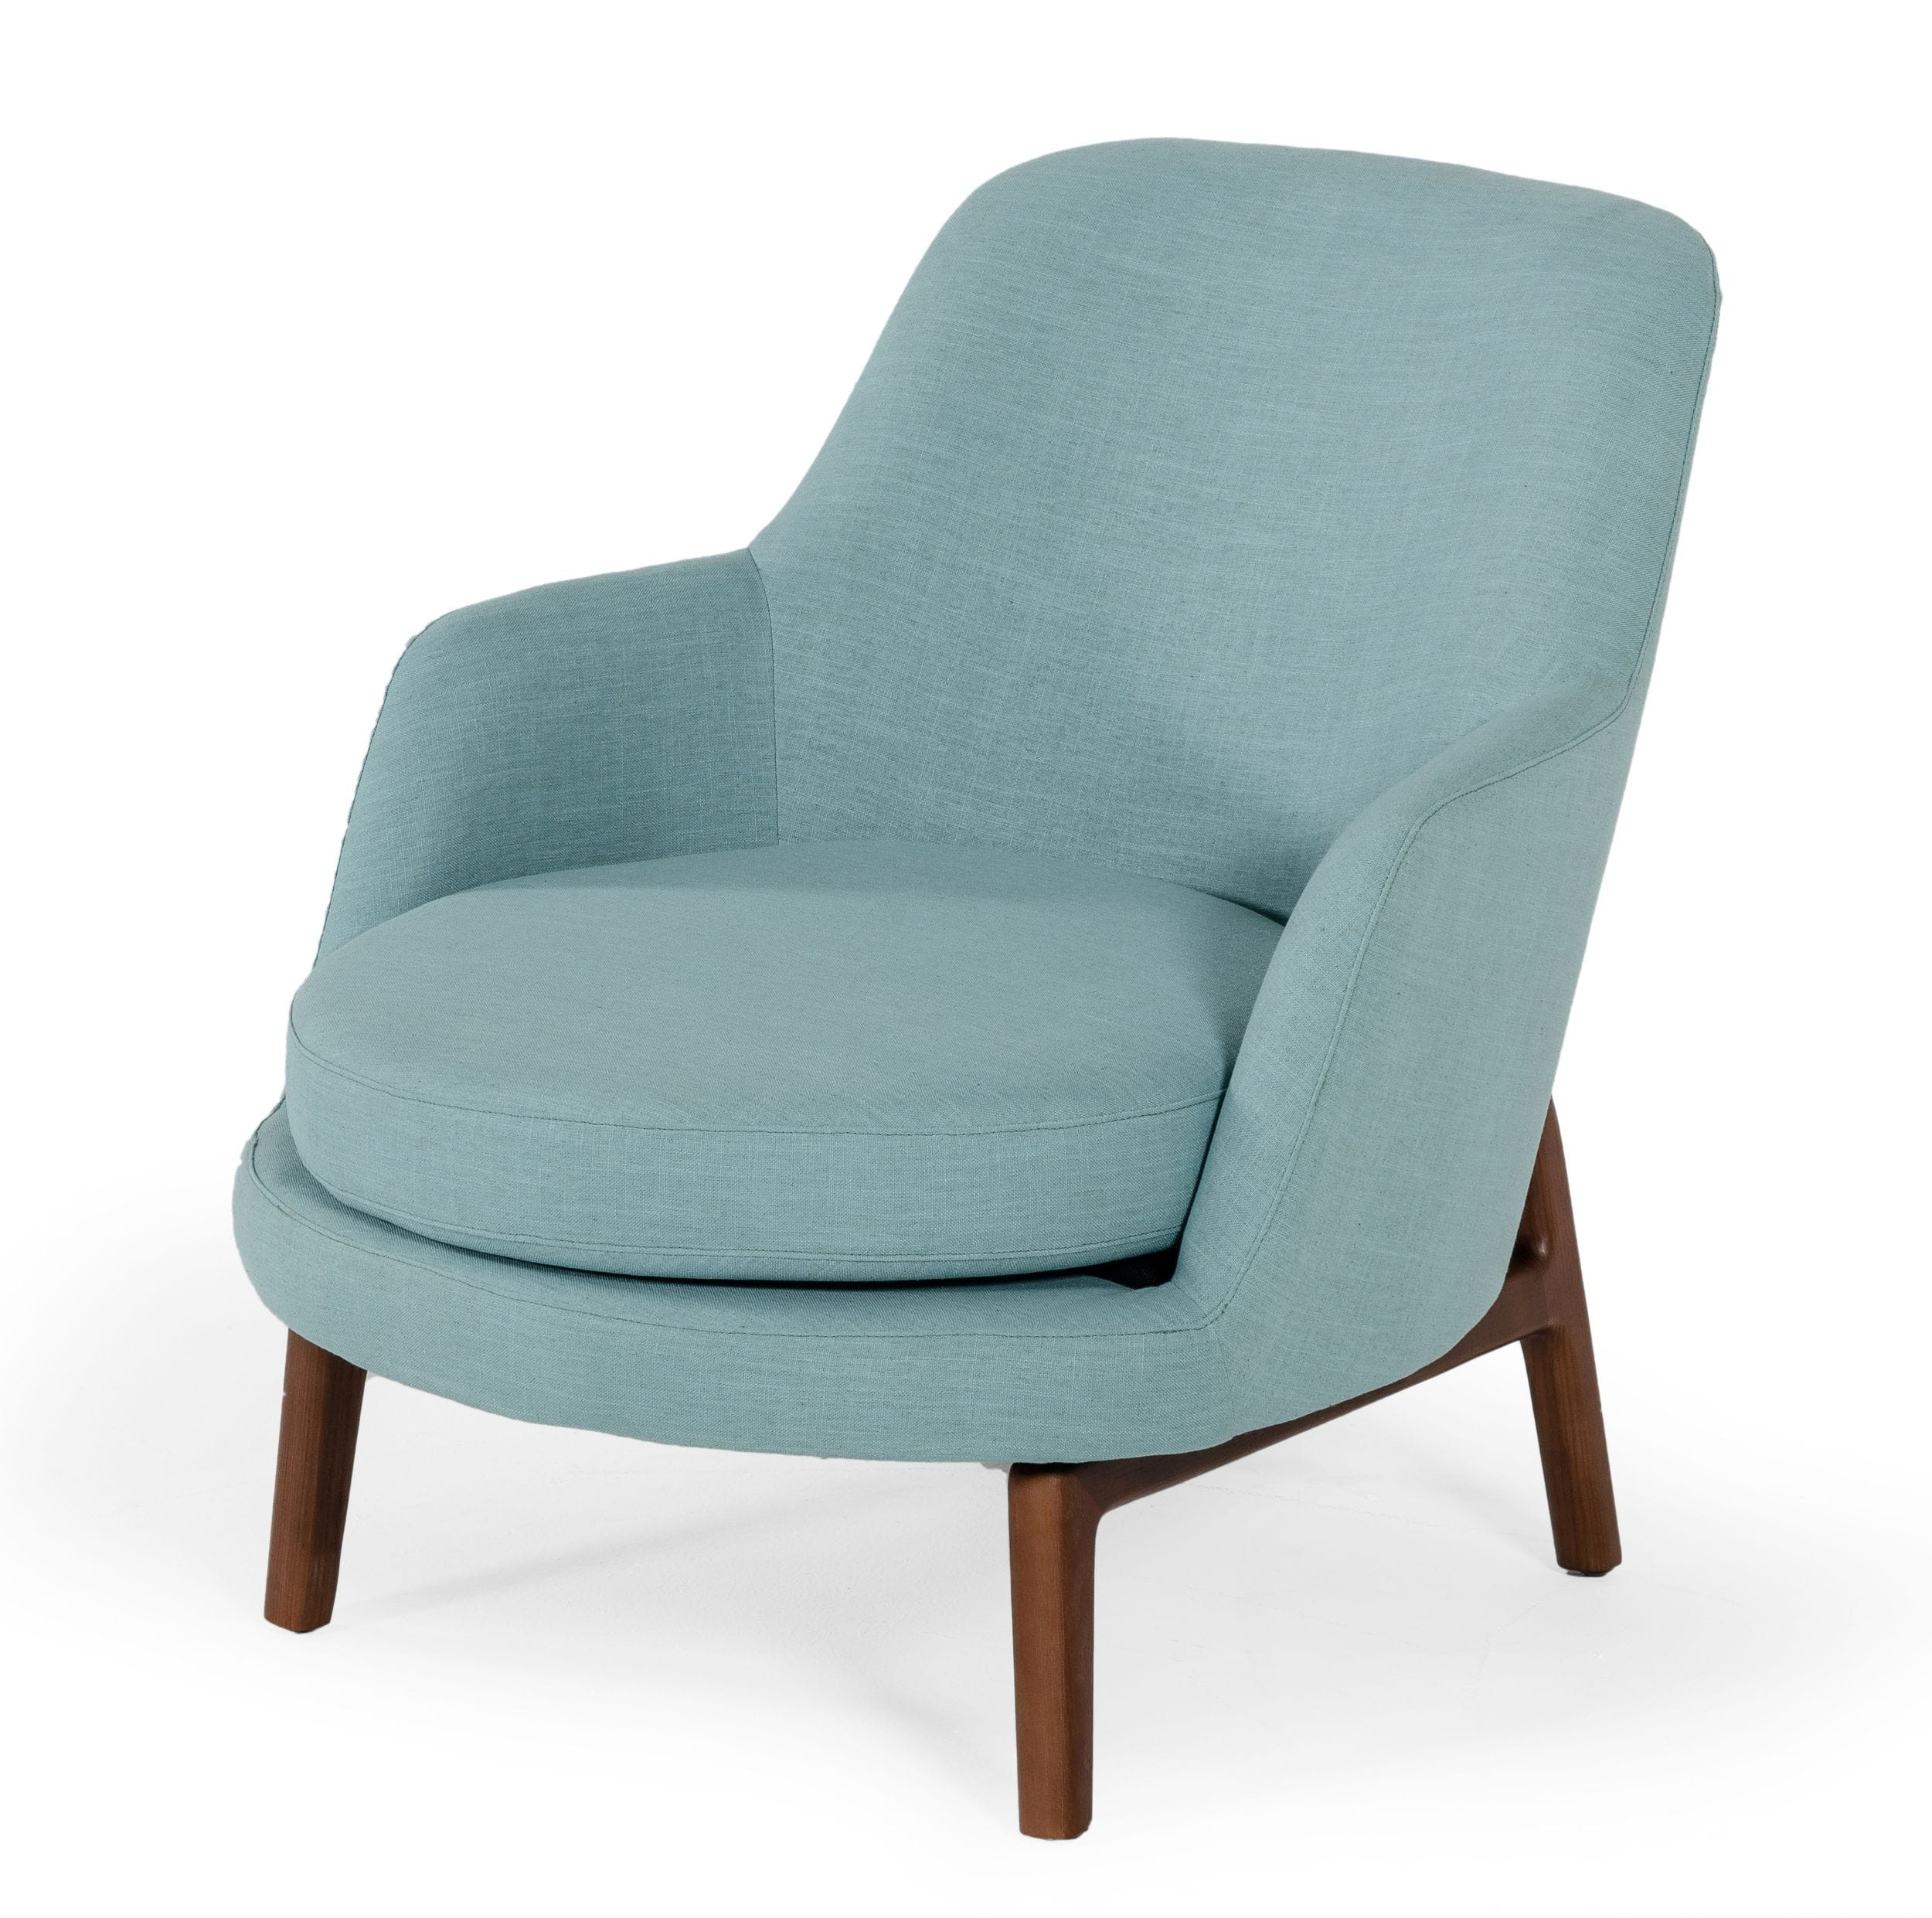 Meta Description Buy Any Modern Lounge Chairs, Chaise dedans Chaise Bixby